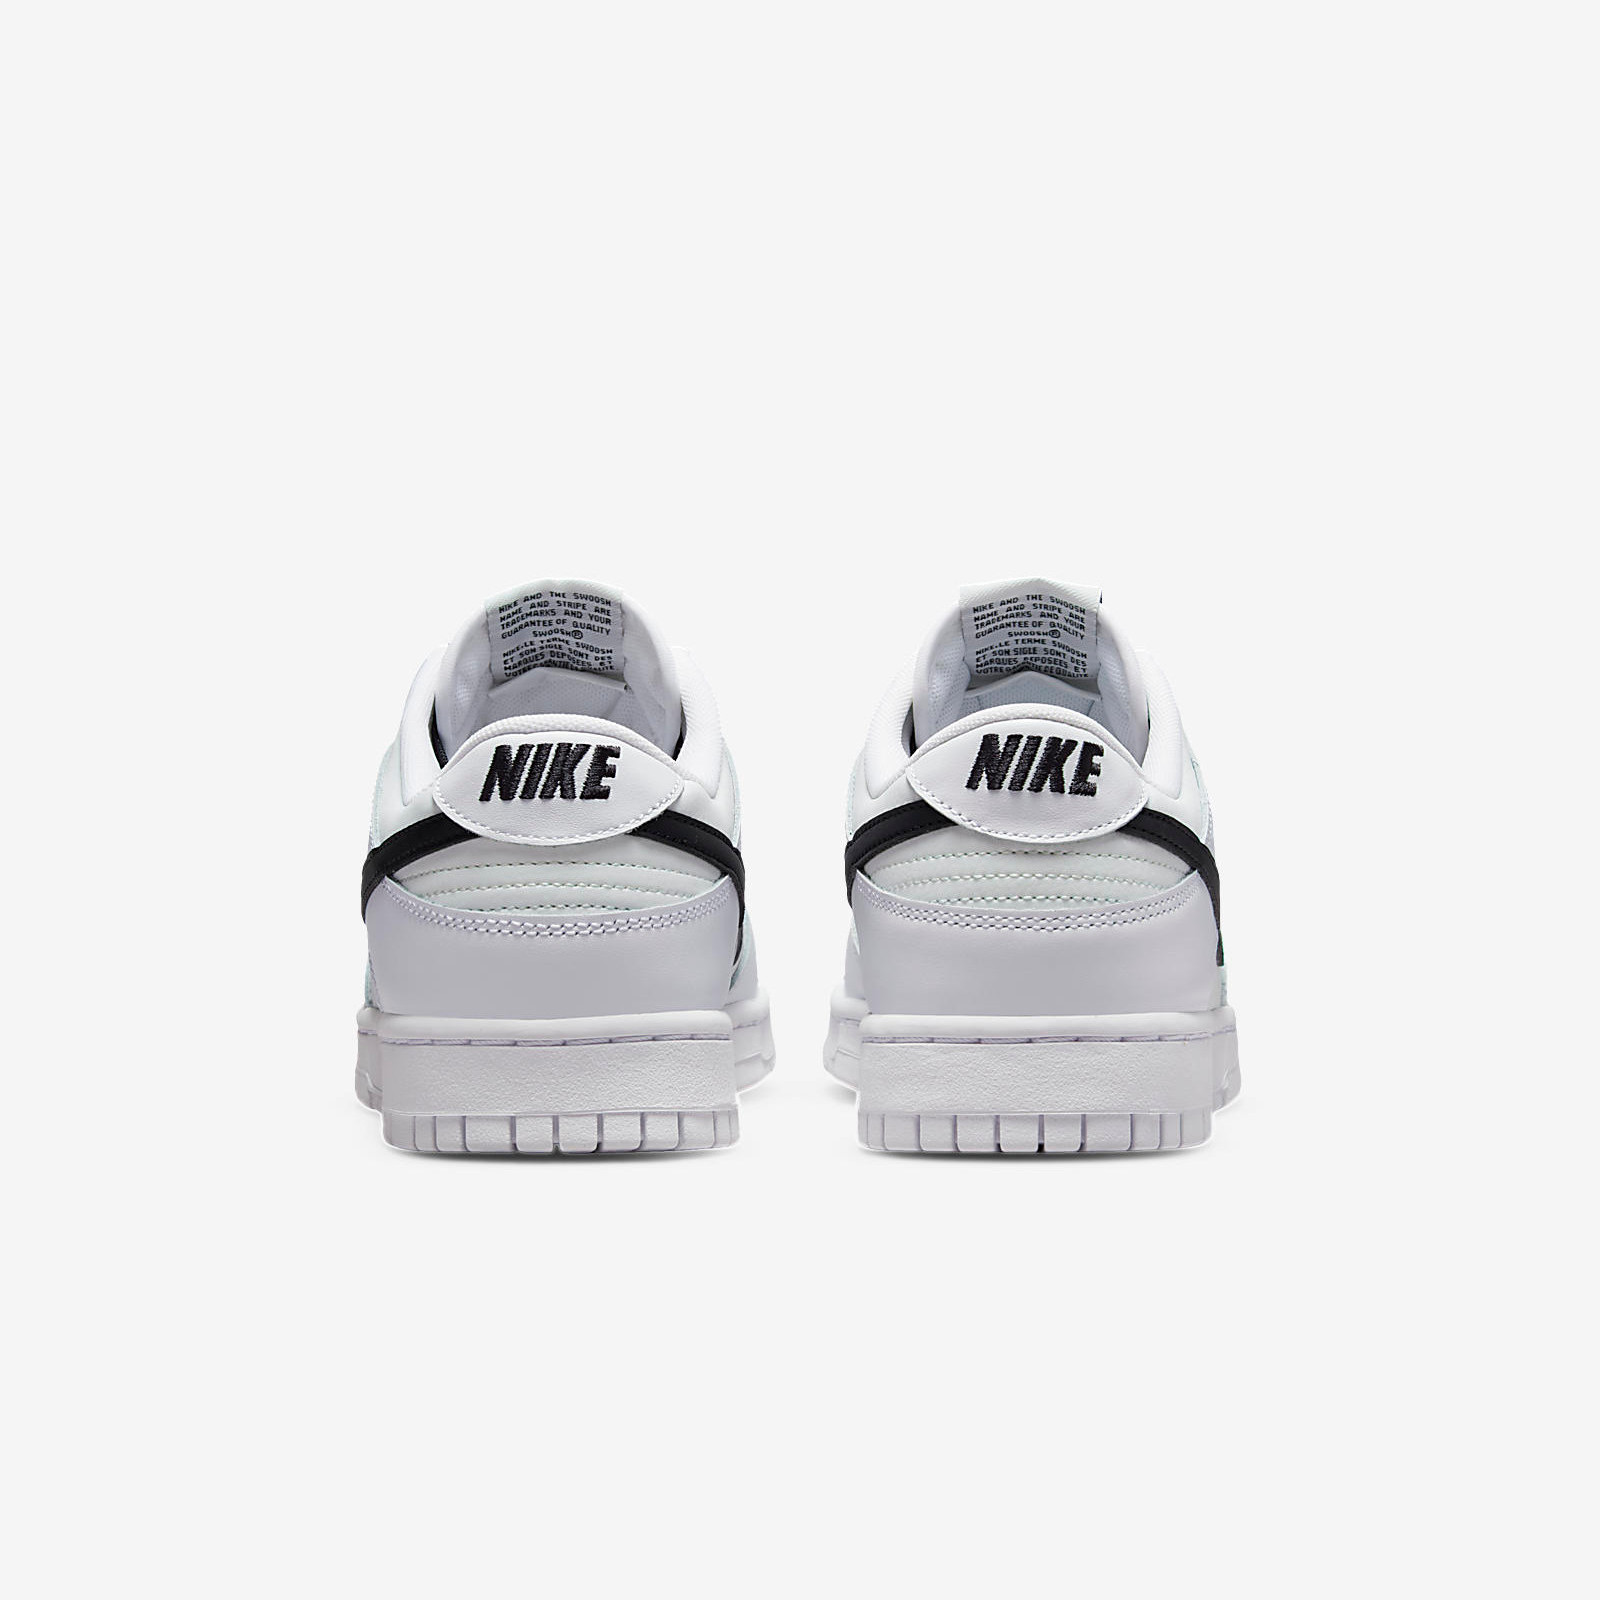 Nike Dunk Low
White / Black